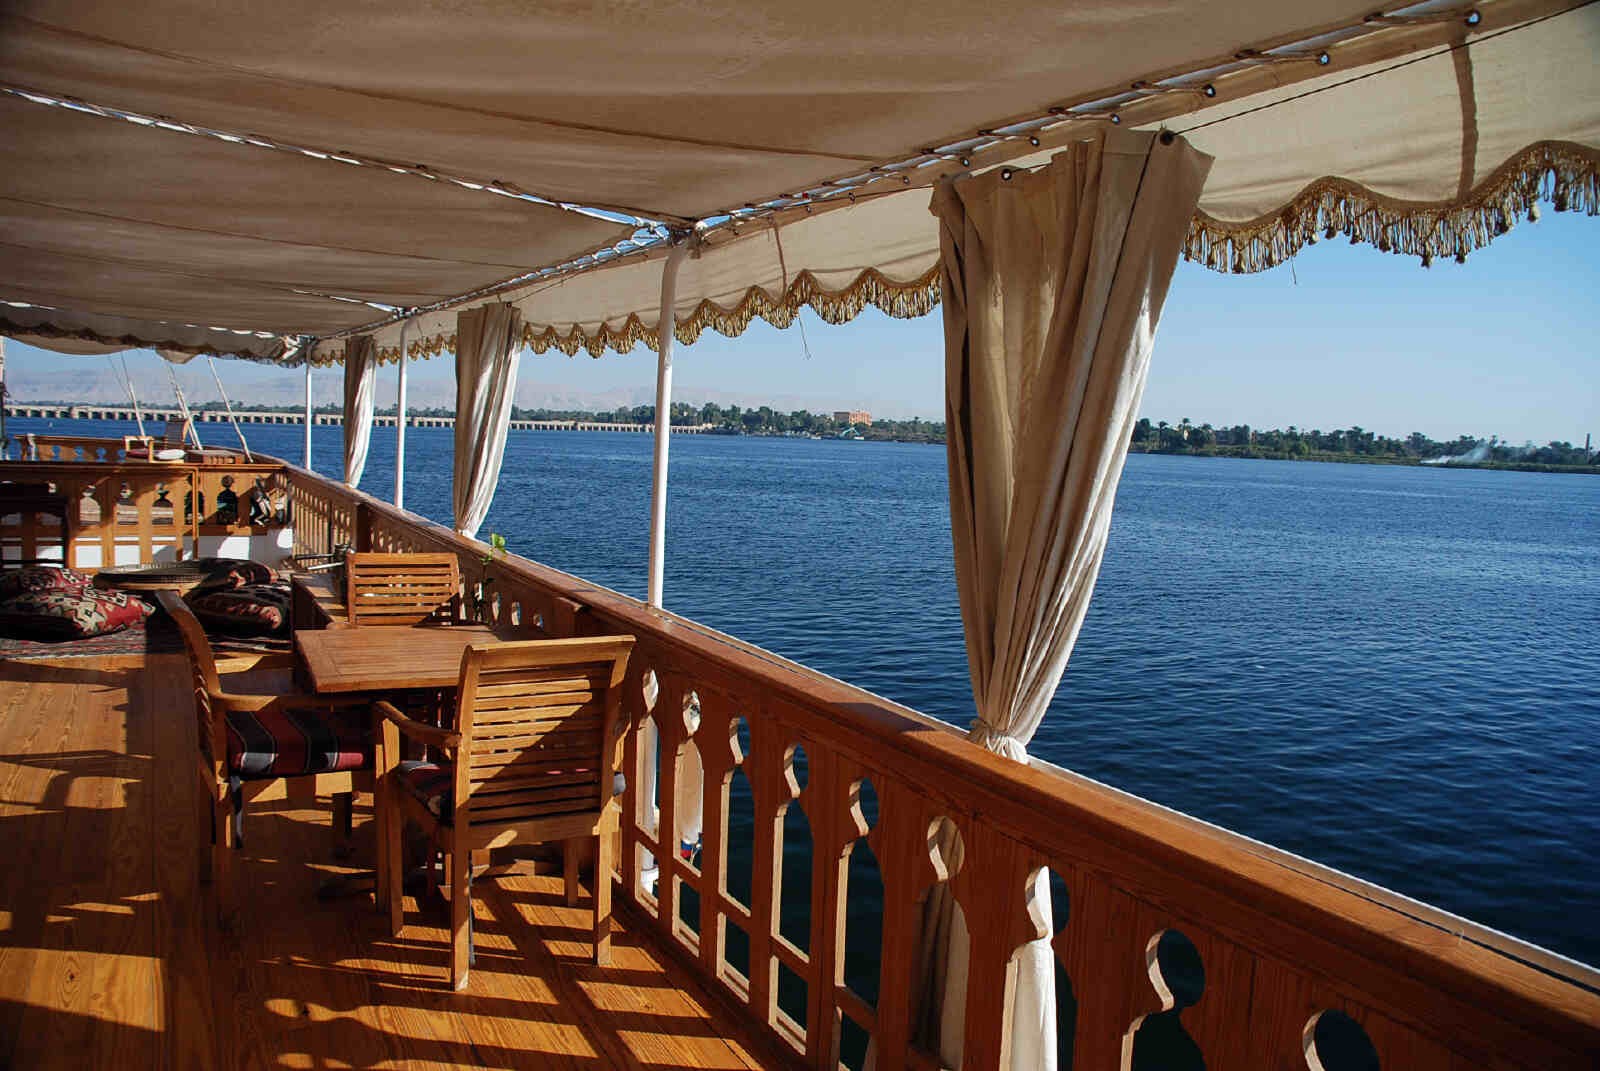 Nile River Cruise guide